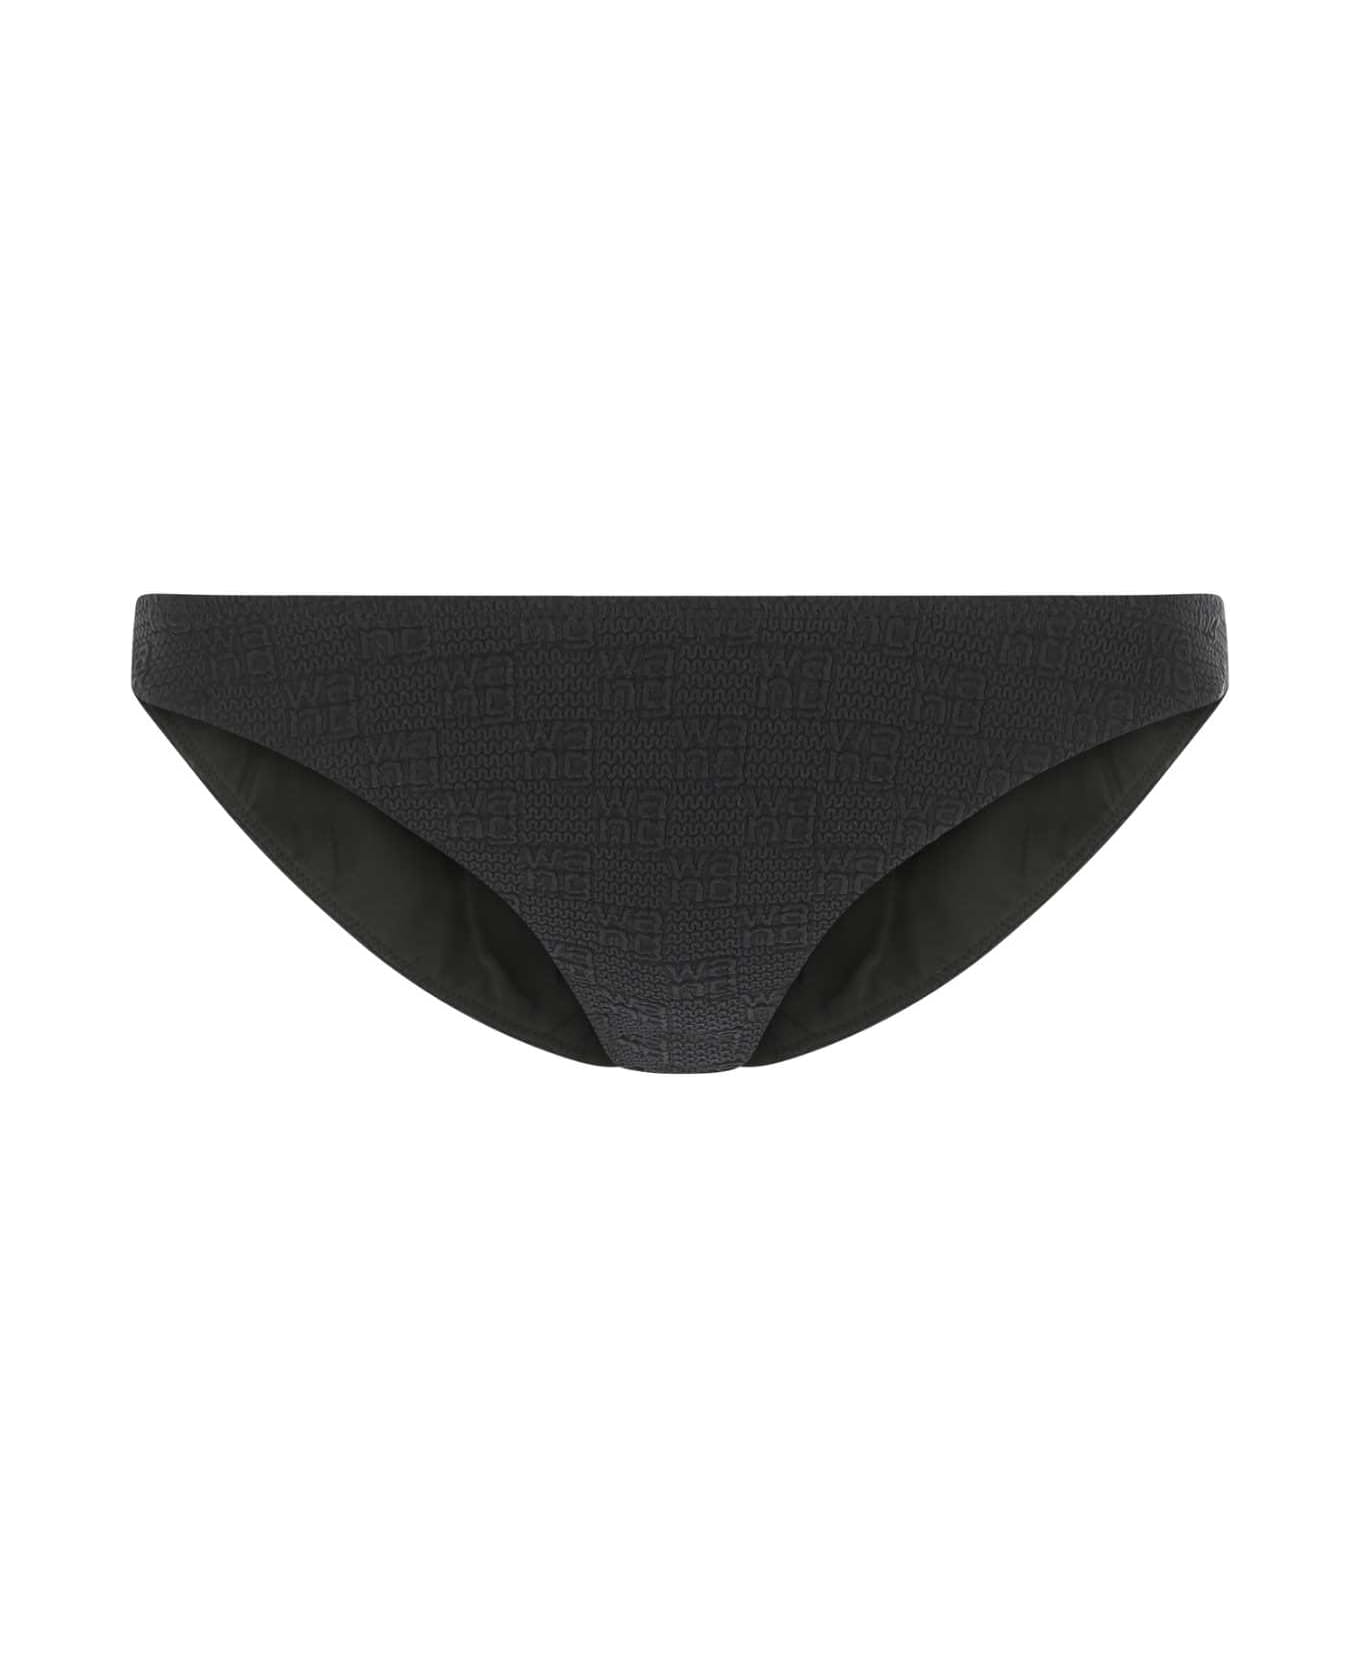 Alexander Wang Black Stretch Nylon Bikini Bottom - 001 水着